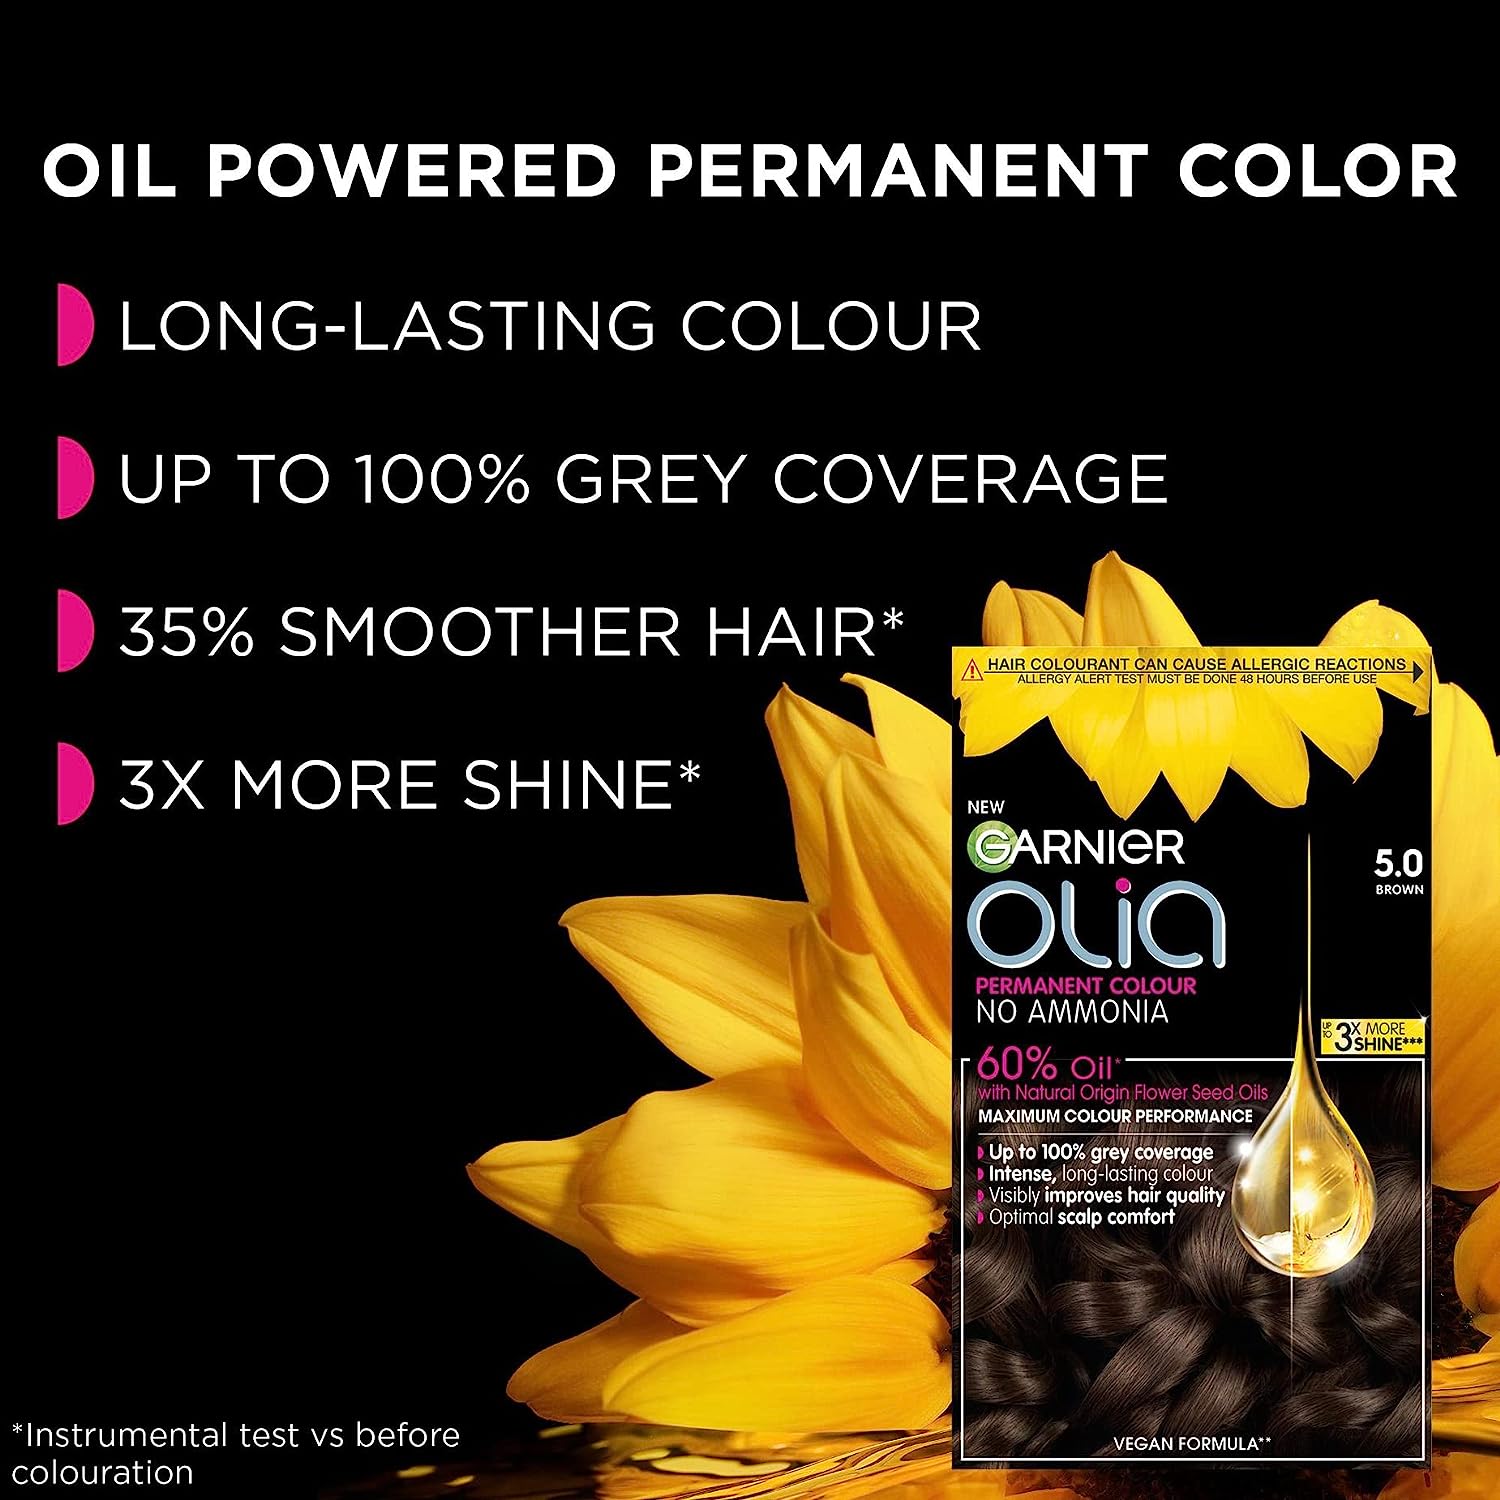 Garnier Olia 4.15 Iced Chocolate Brown Permanent Hair Dye - Healthxpress.ie